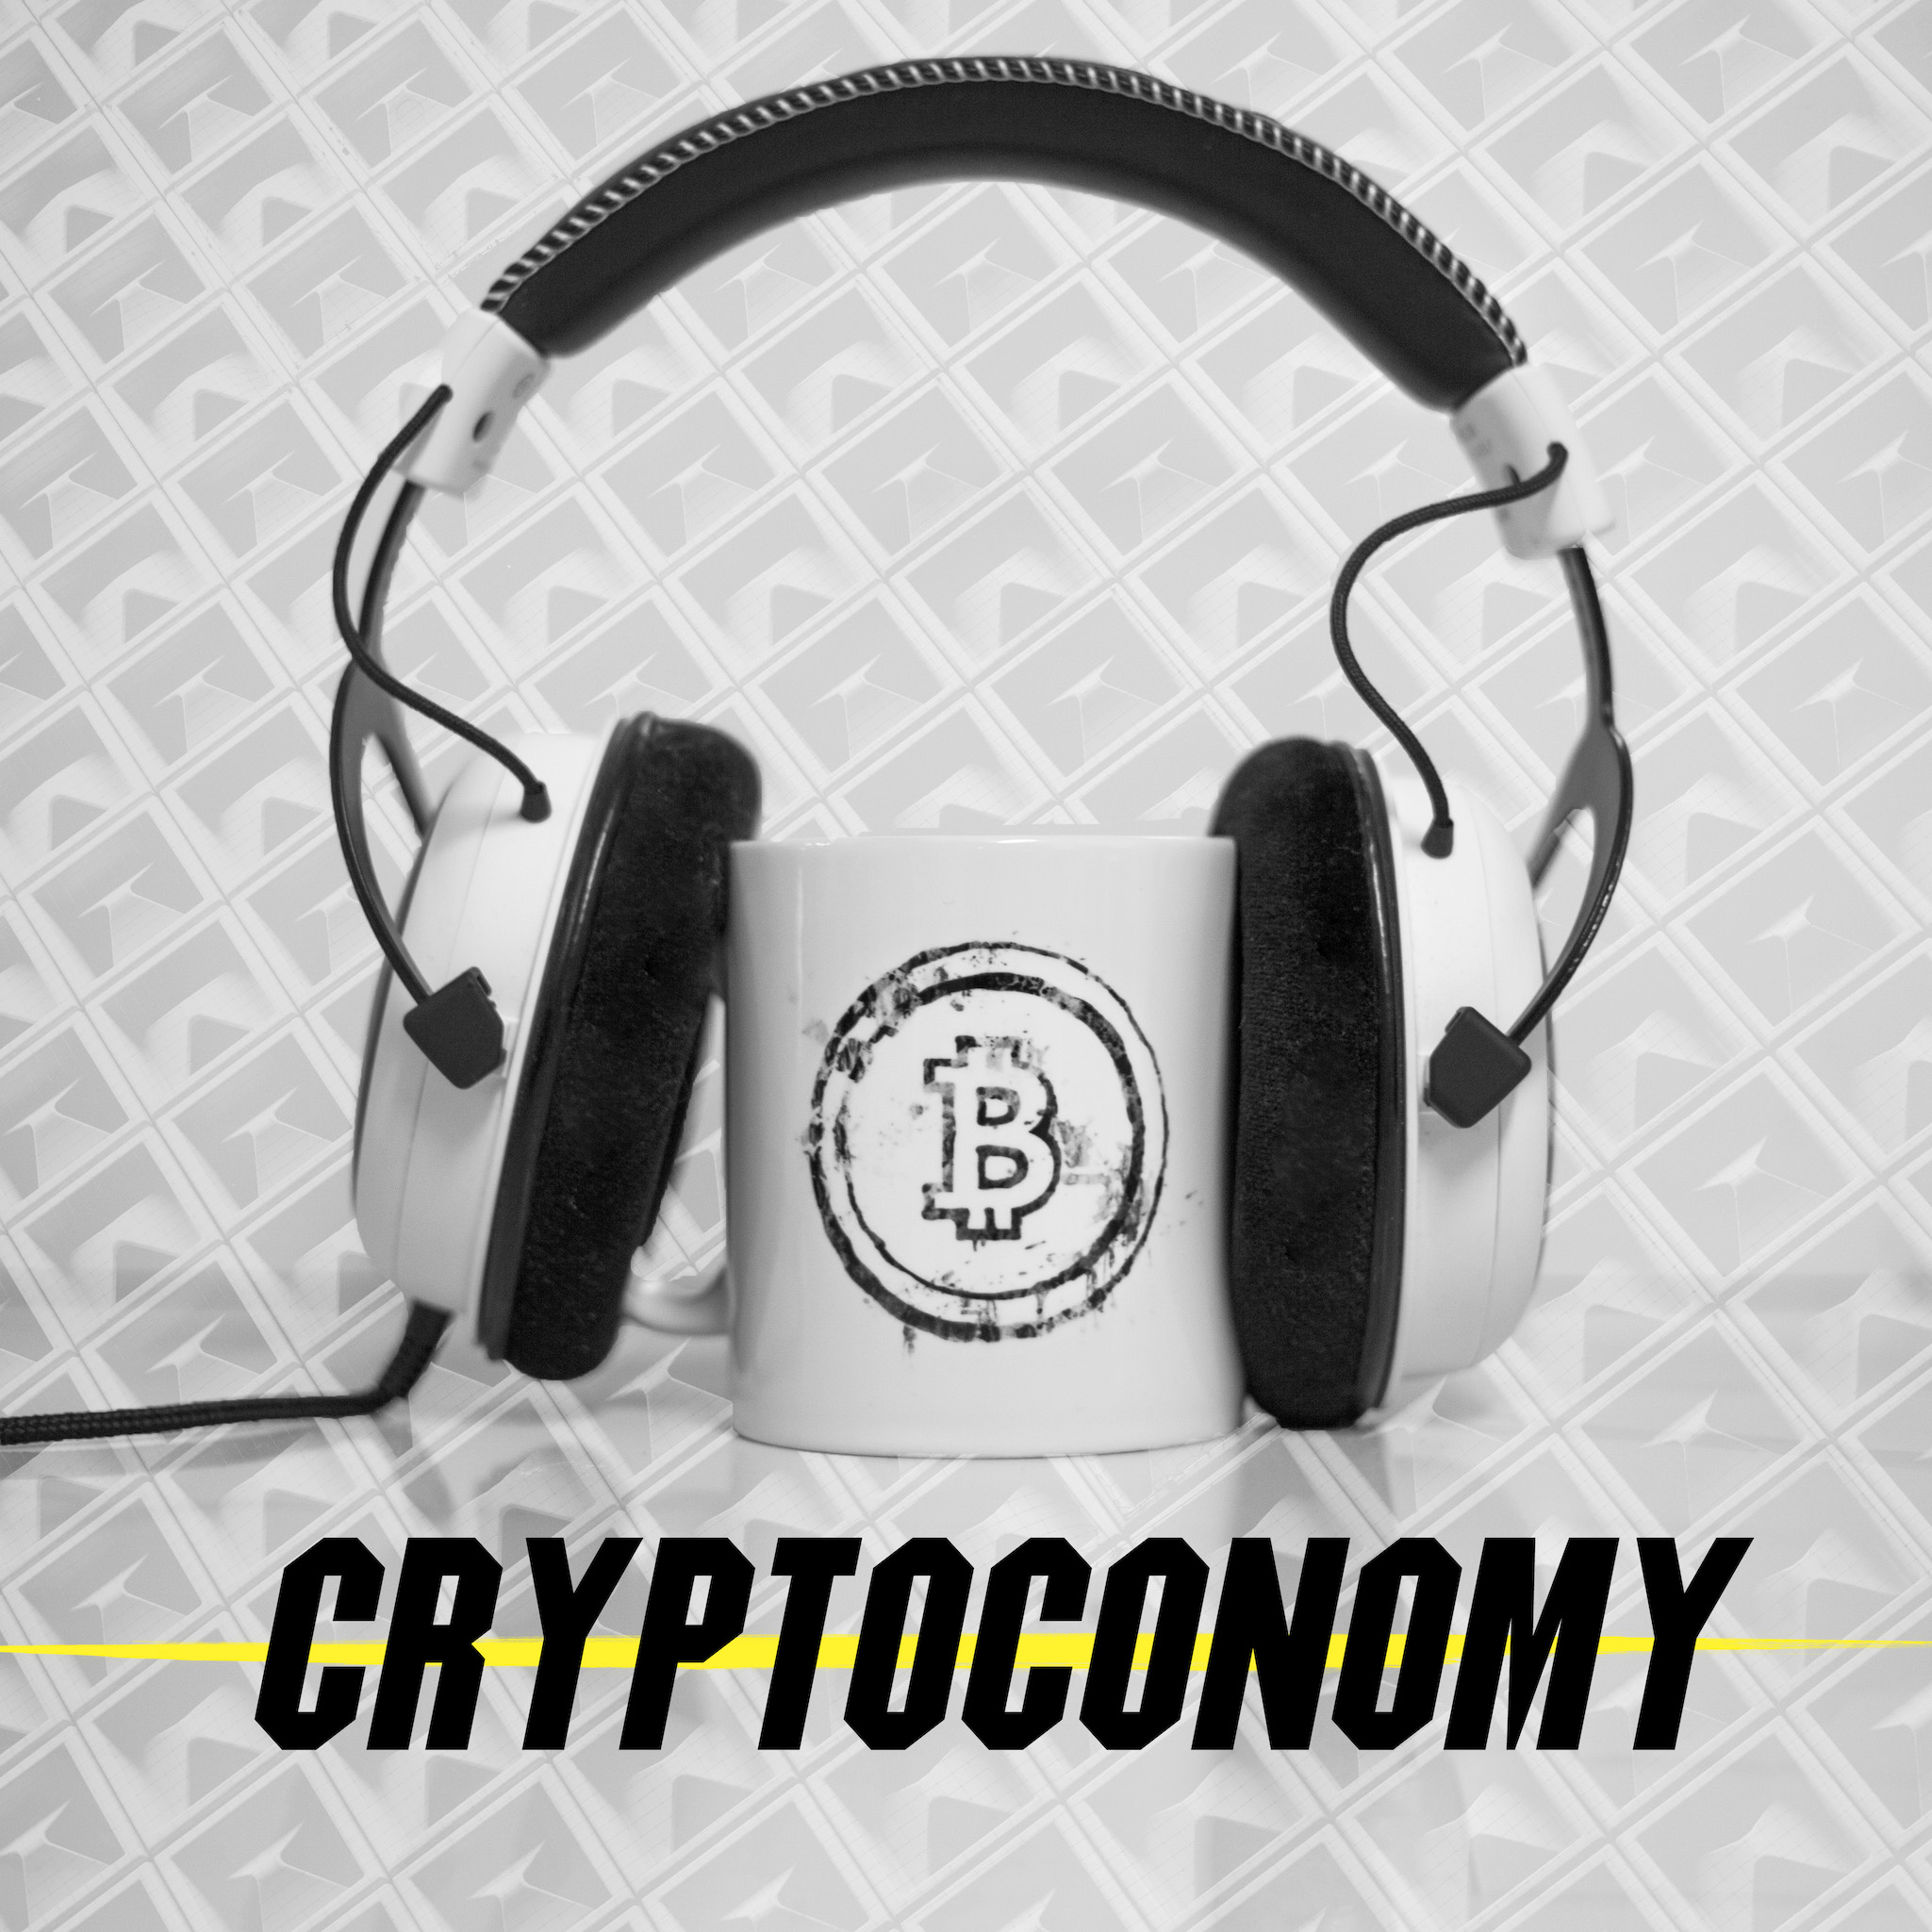 CryptoQuikRead_180 - Bitcoin at 10 [beautyon_]